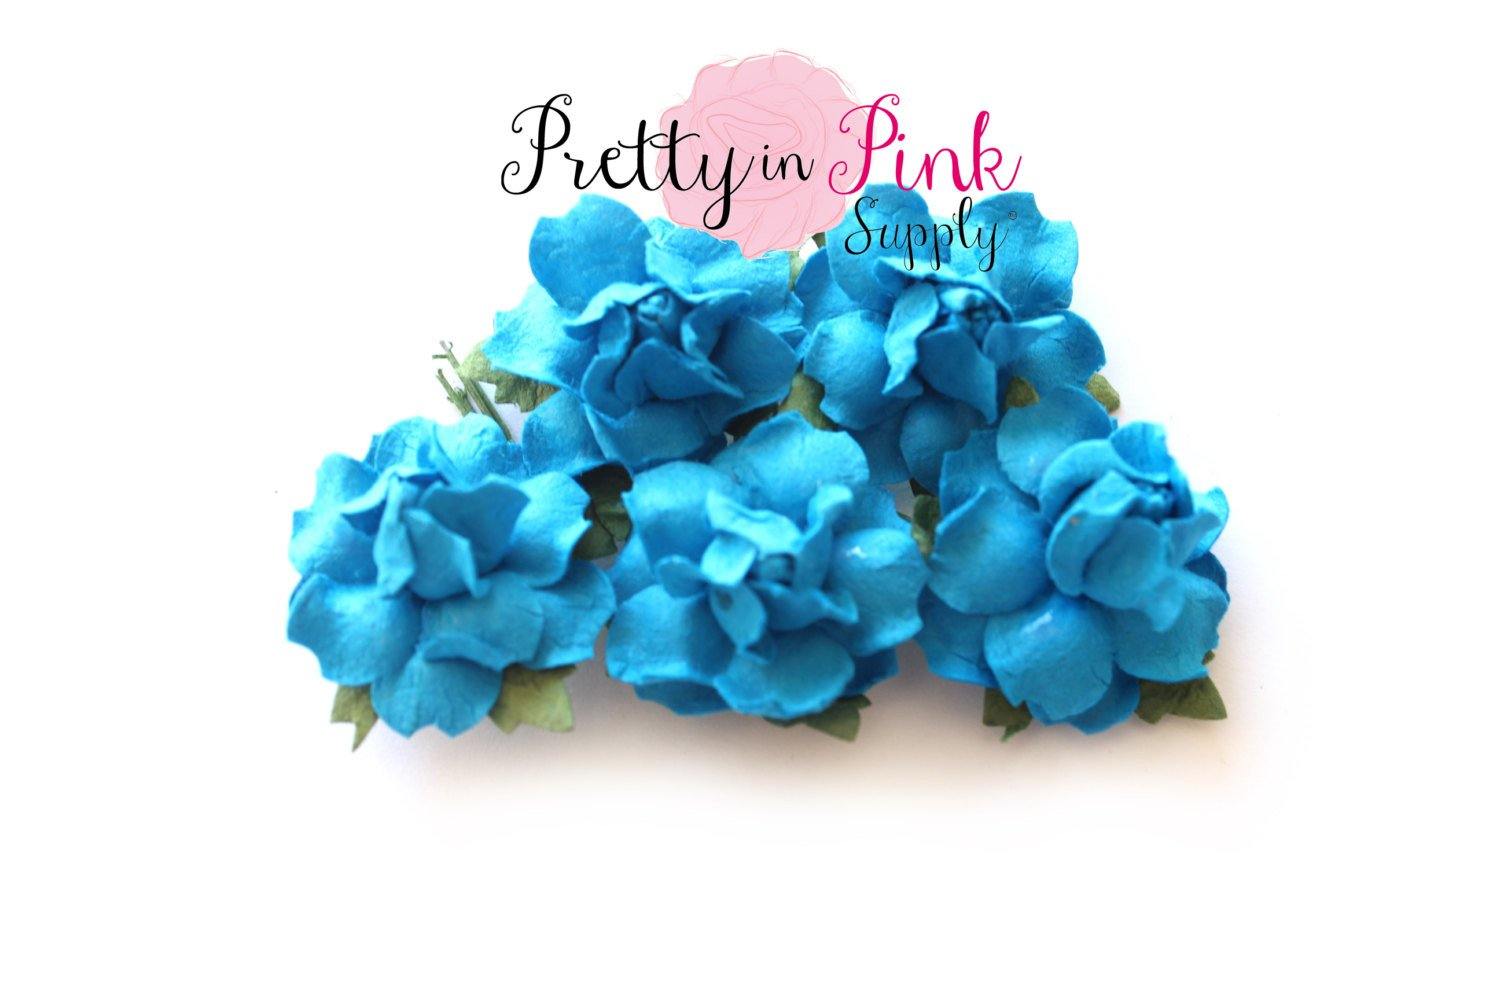 1" PREMIUM Ocean Blue Paper Flowers - Pretty in Pink Supply